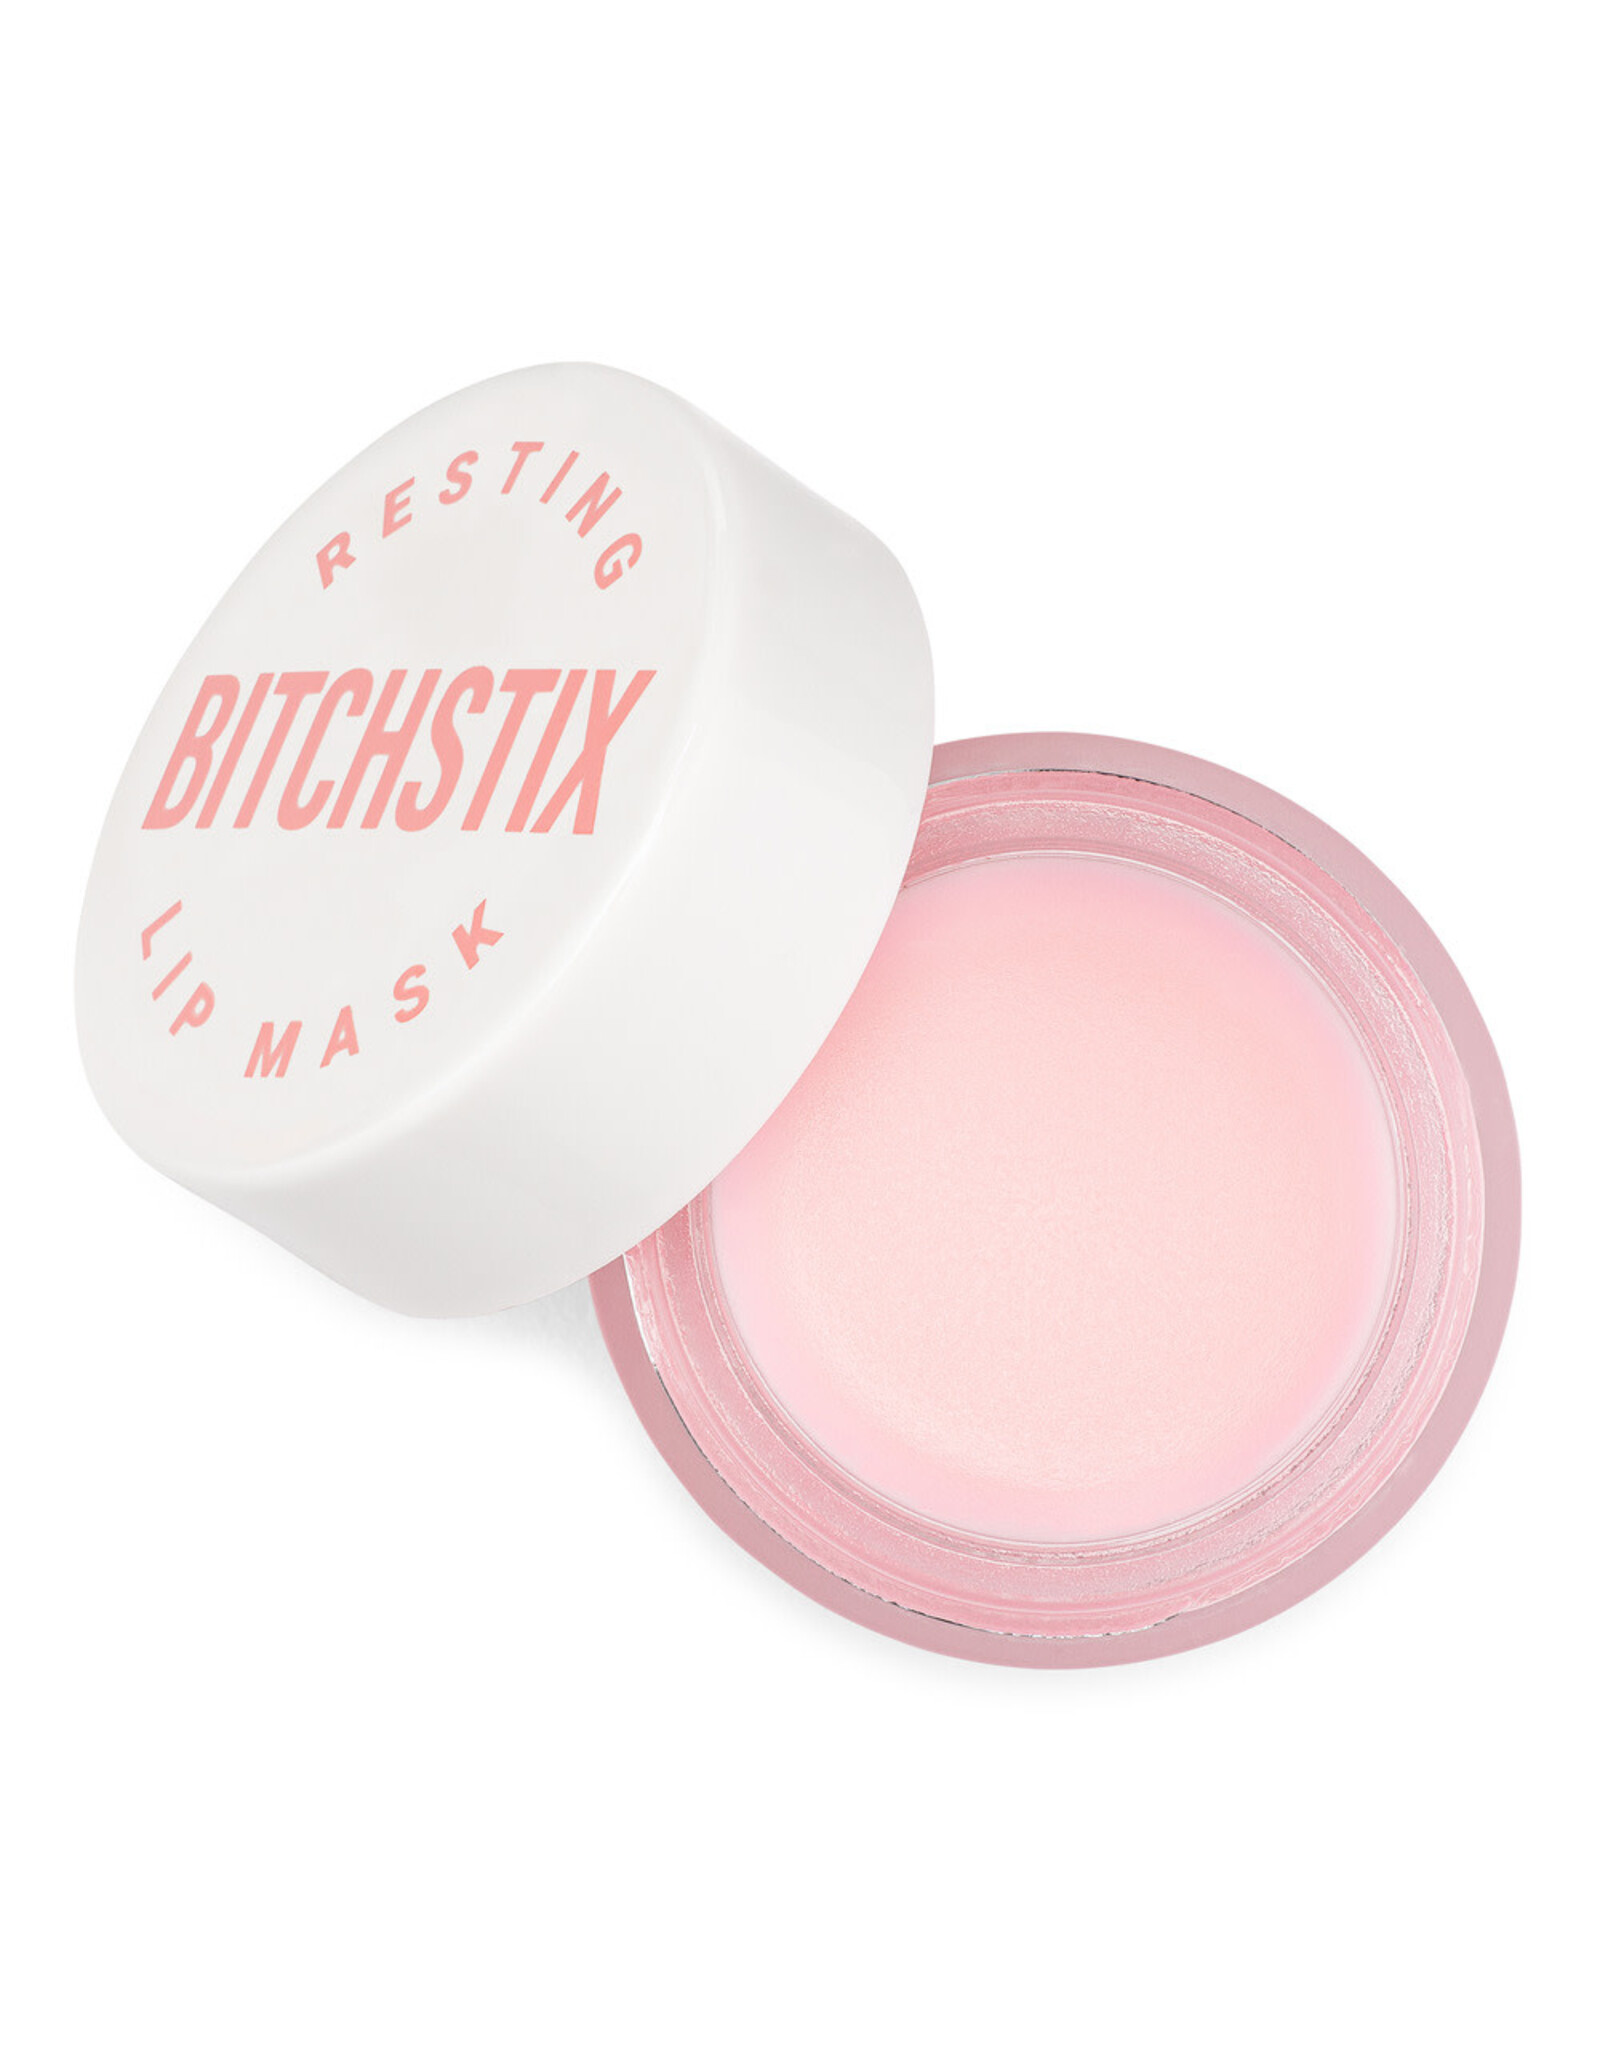 BitchStix BitchStix - Berry Resting Lip Mask